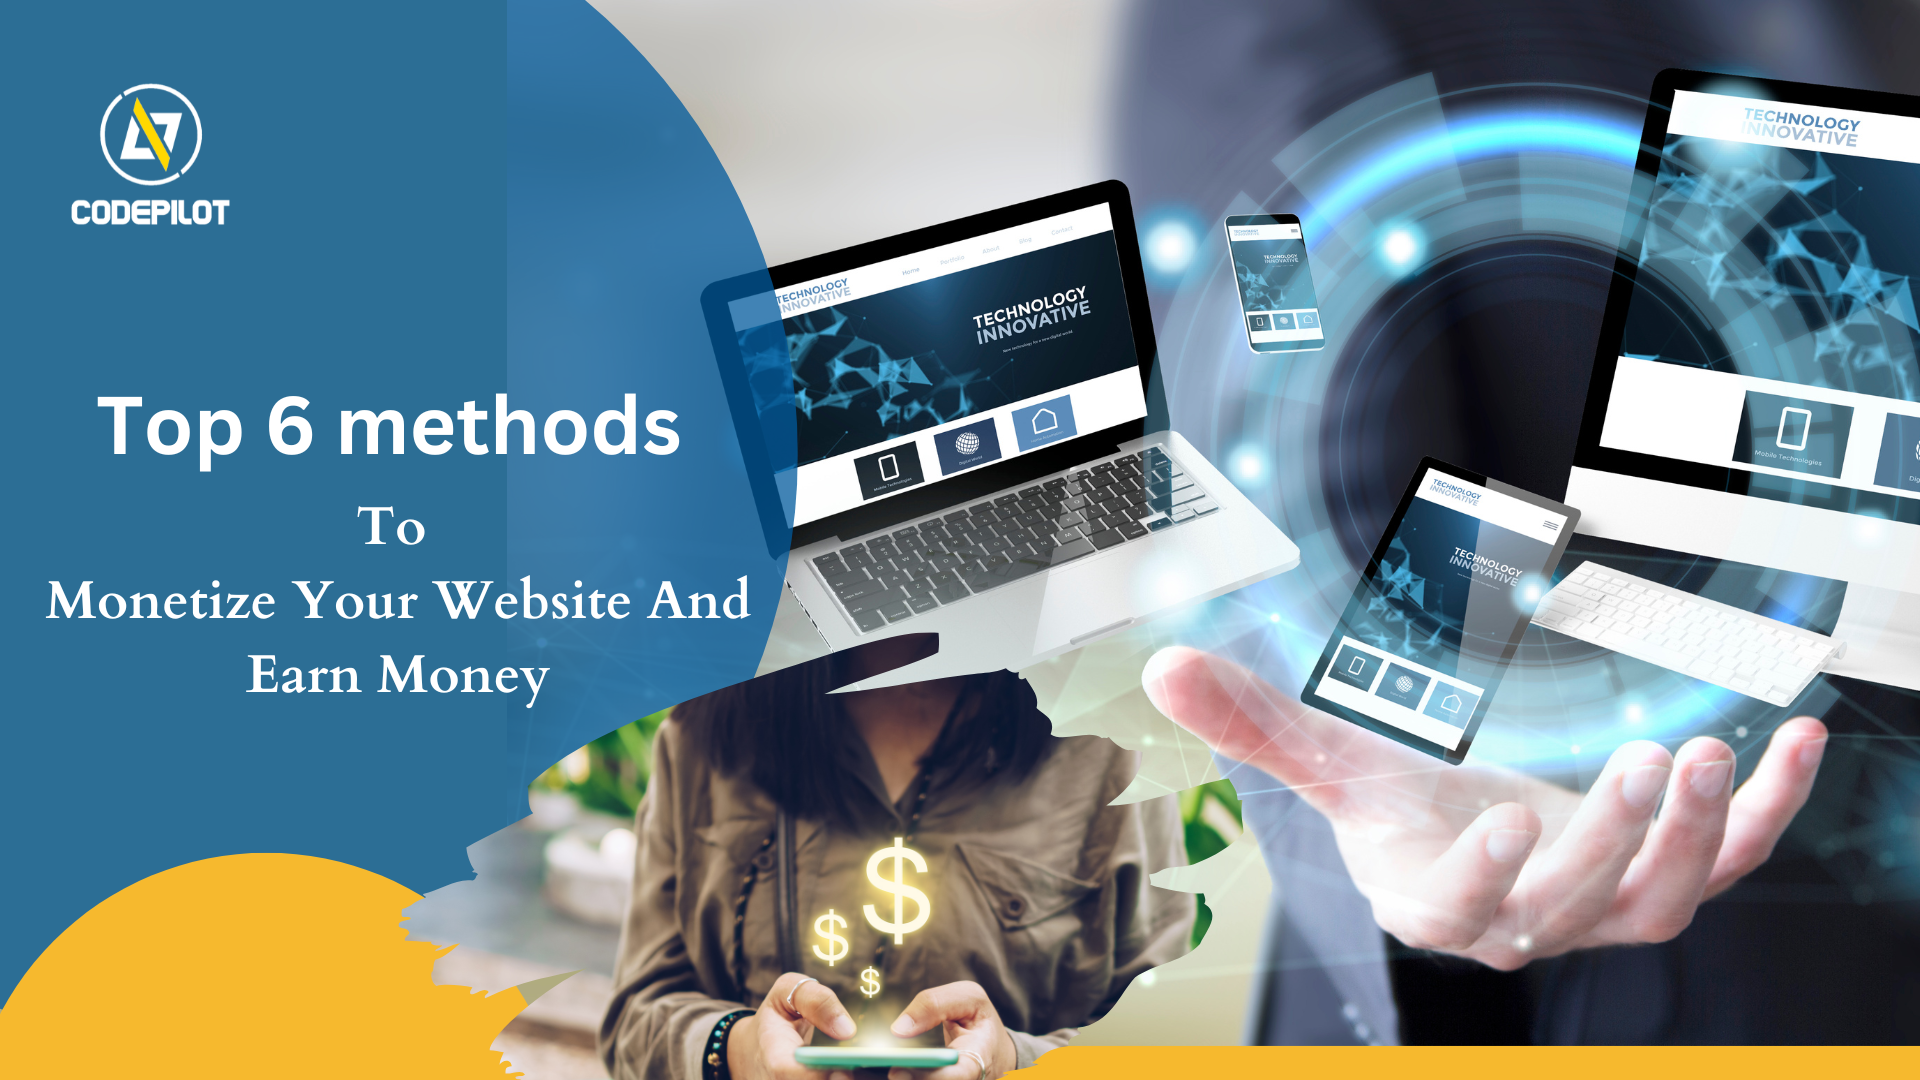 Top 6 methods to monetize your website and earn money